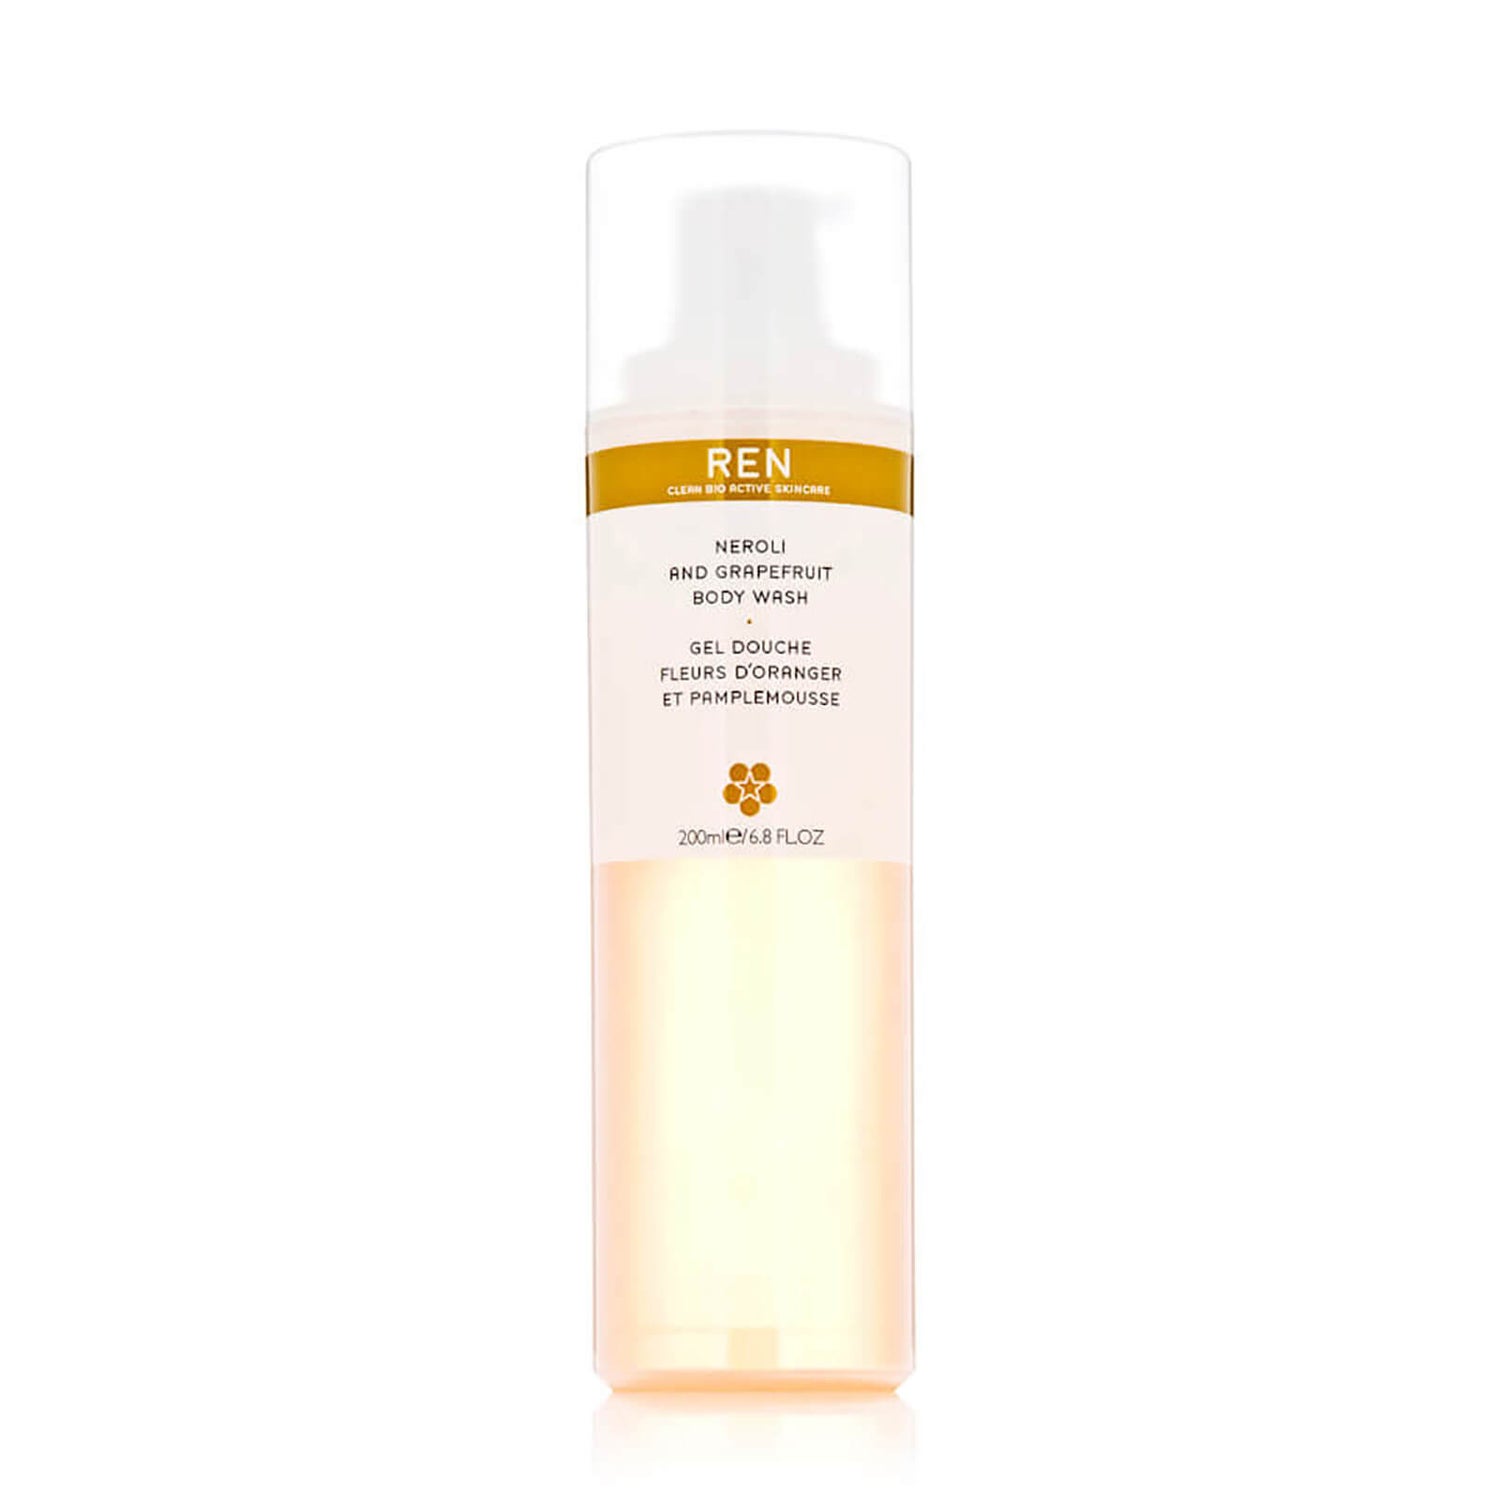 REN Clean Skincare Neroli and Grapefruit Body Wash (6.8 fl. oz.)